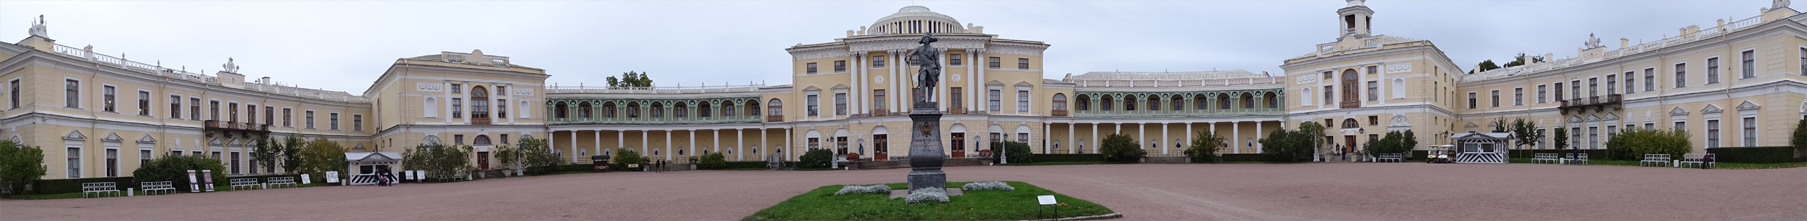 Панорама Павловского дворца